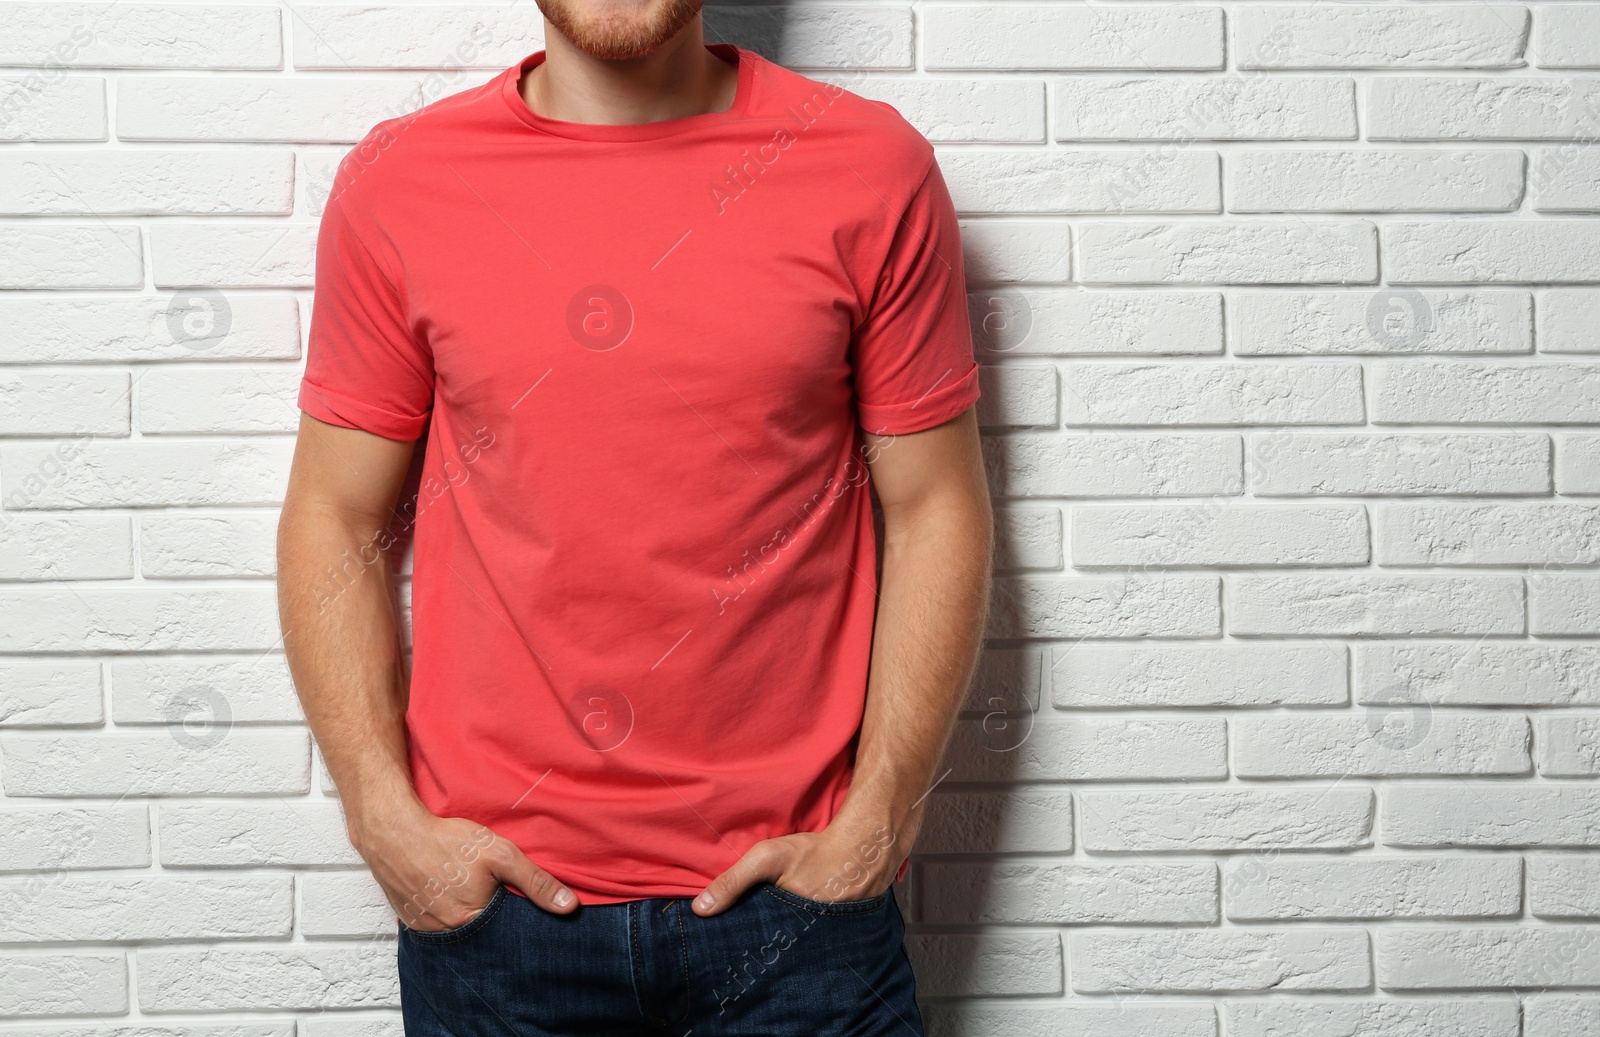 Photo of Young man wearing blank t-shirt near white brick wall, closeup. Mockup for design